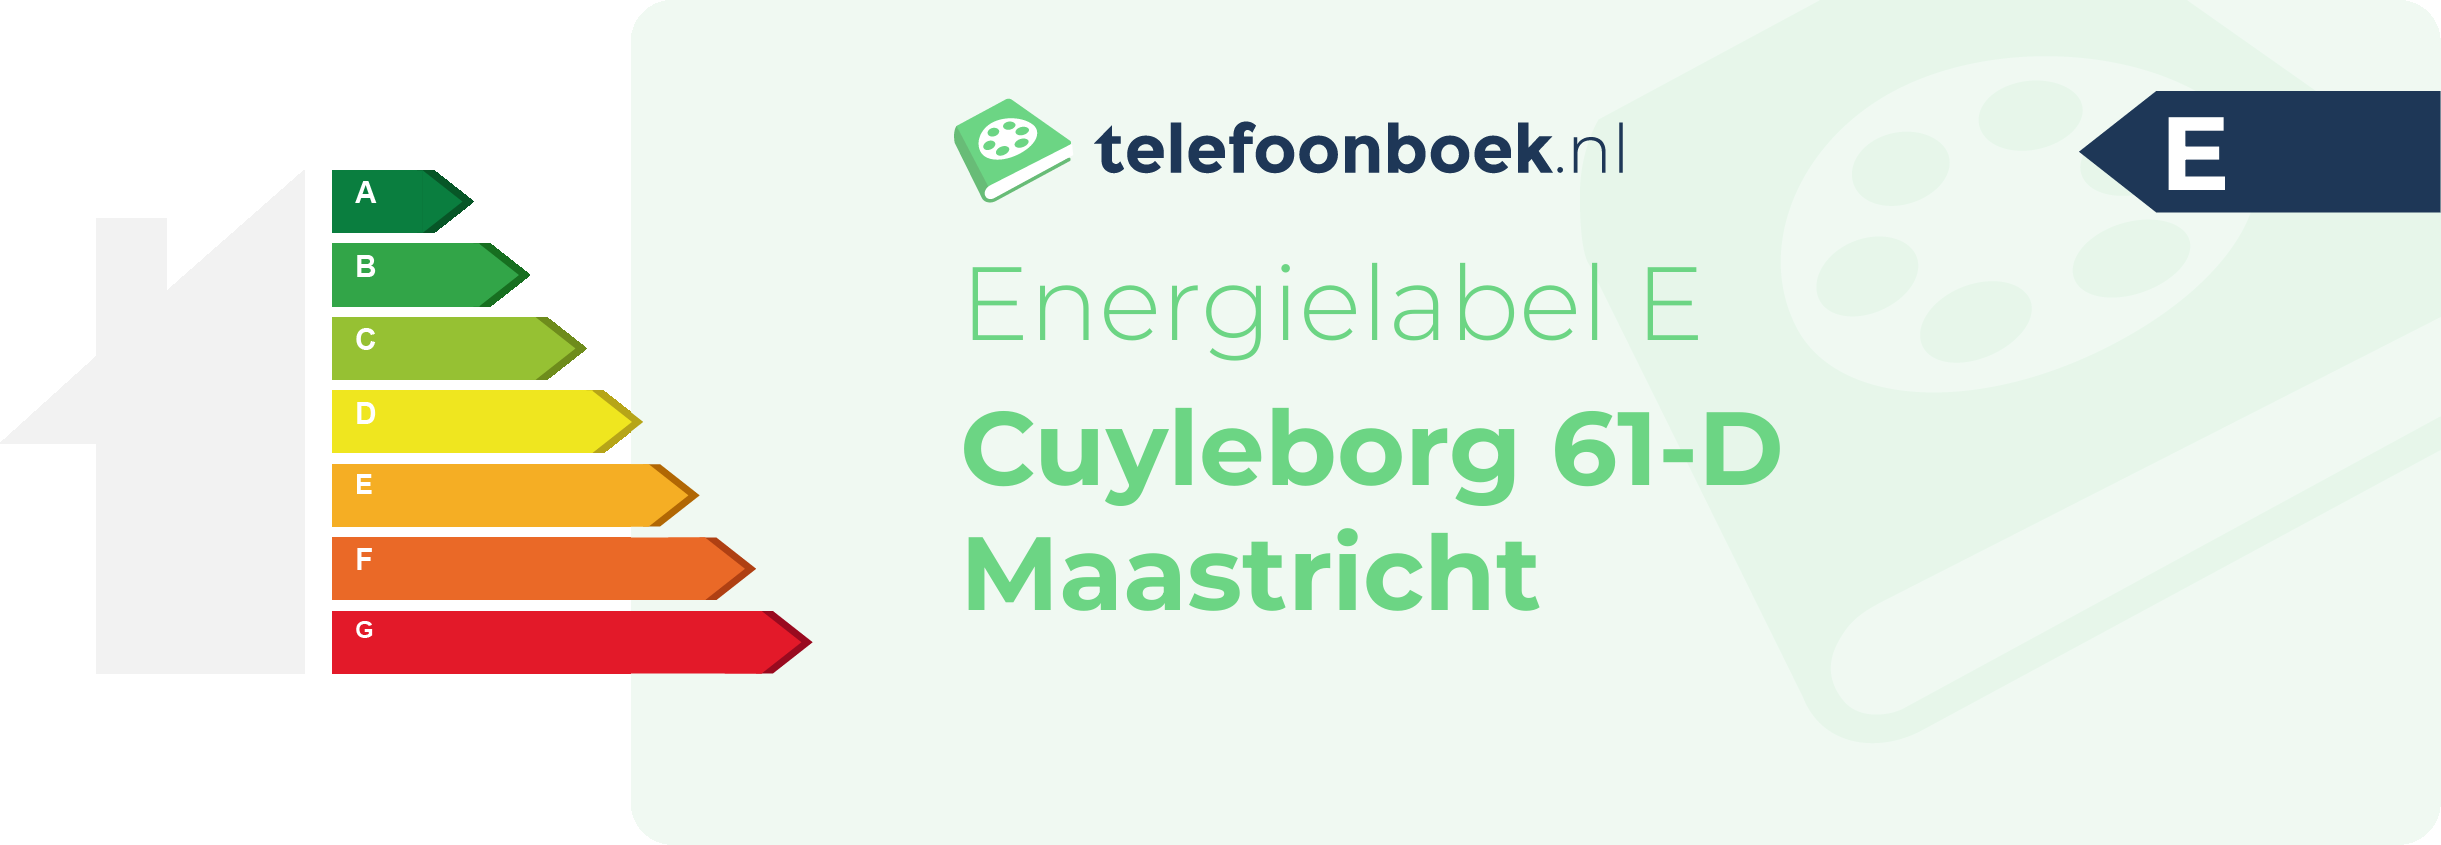 Energielabel Cuyleborg 61-D Maastricht